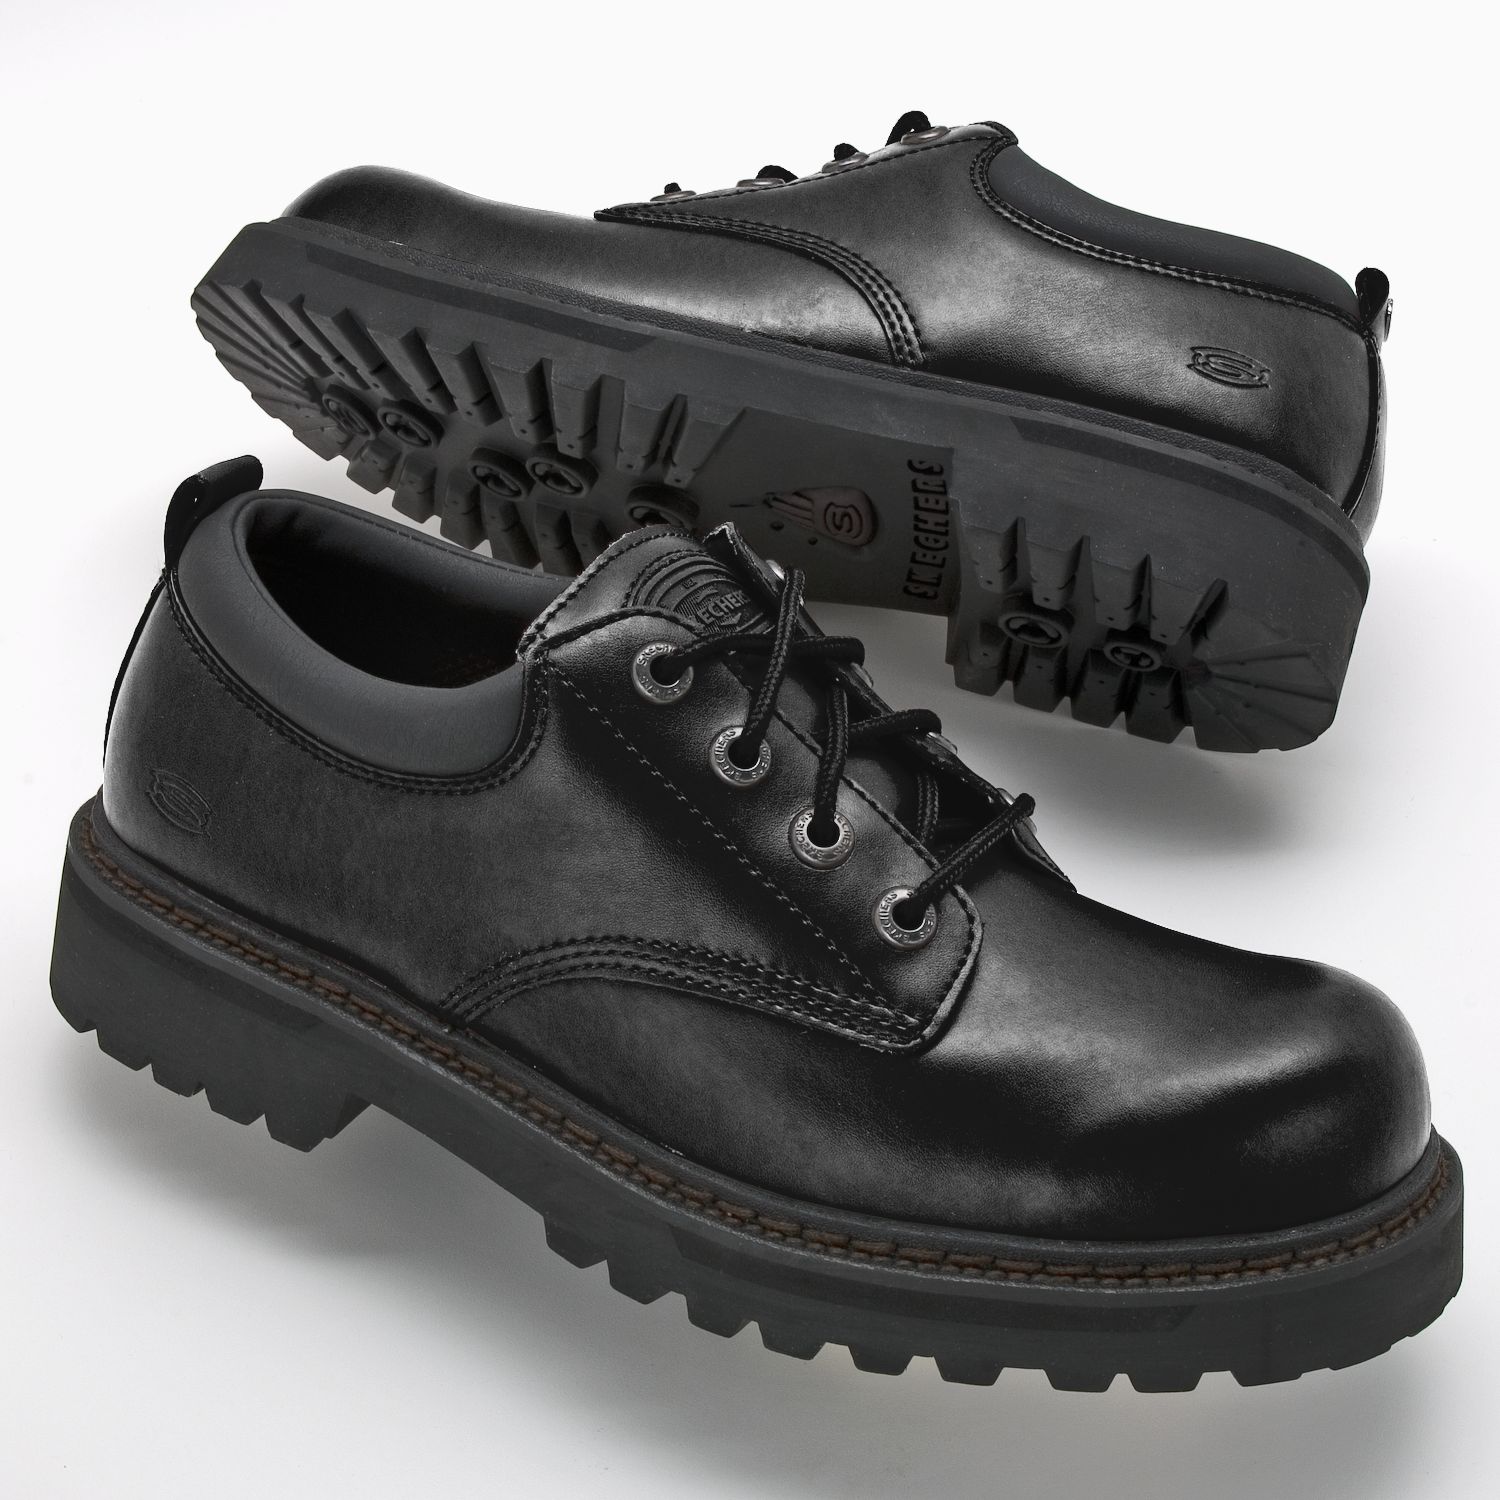 Skechers® Troy Oxford Shoes - Men